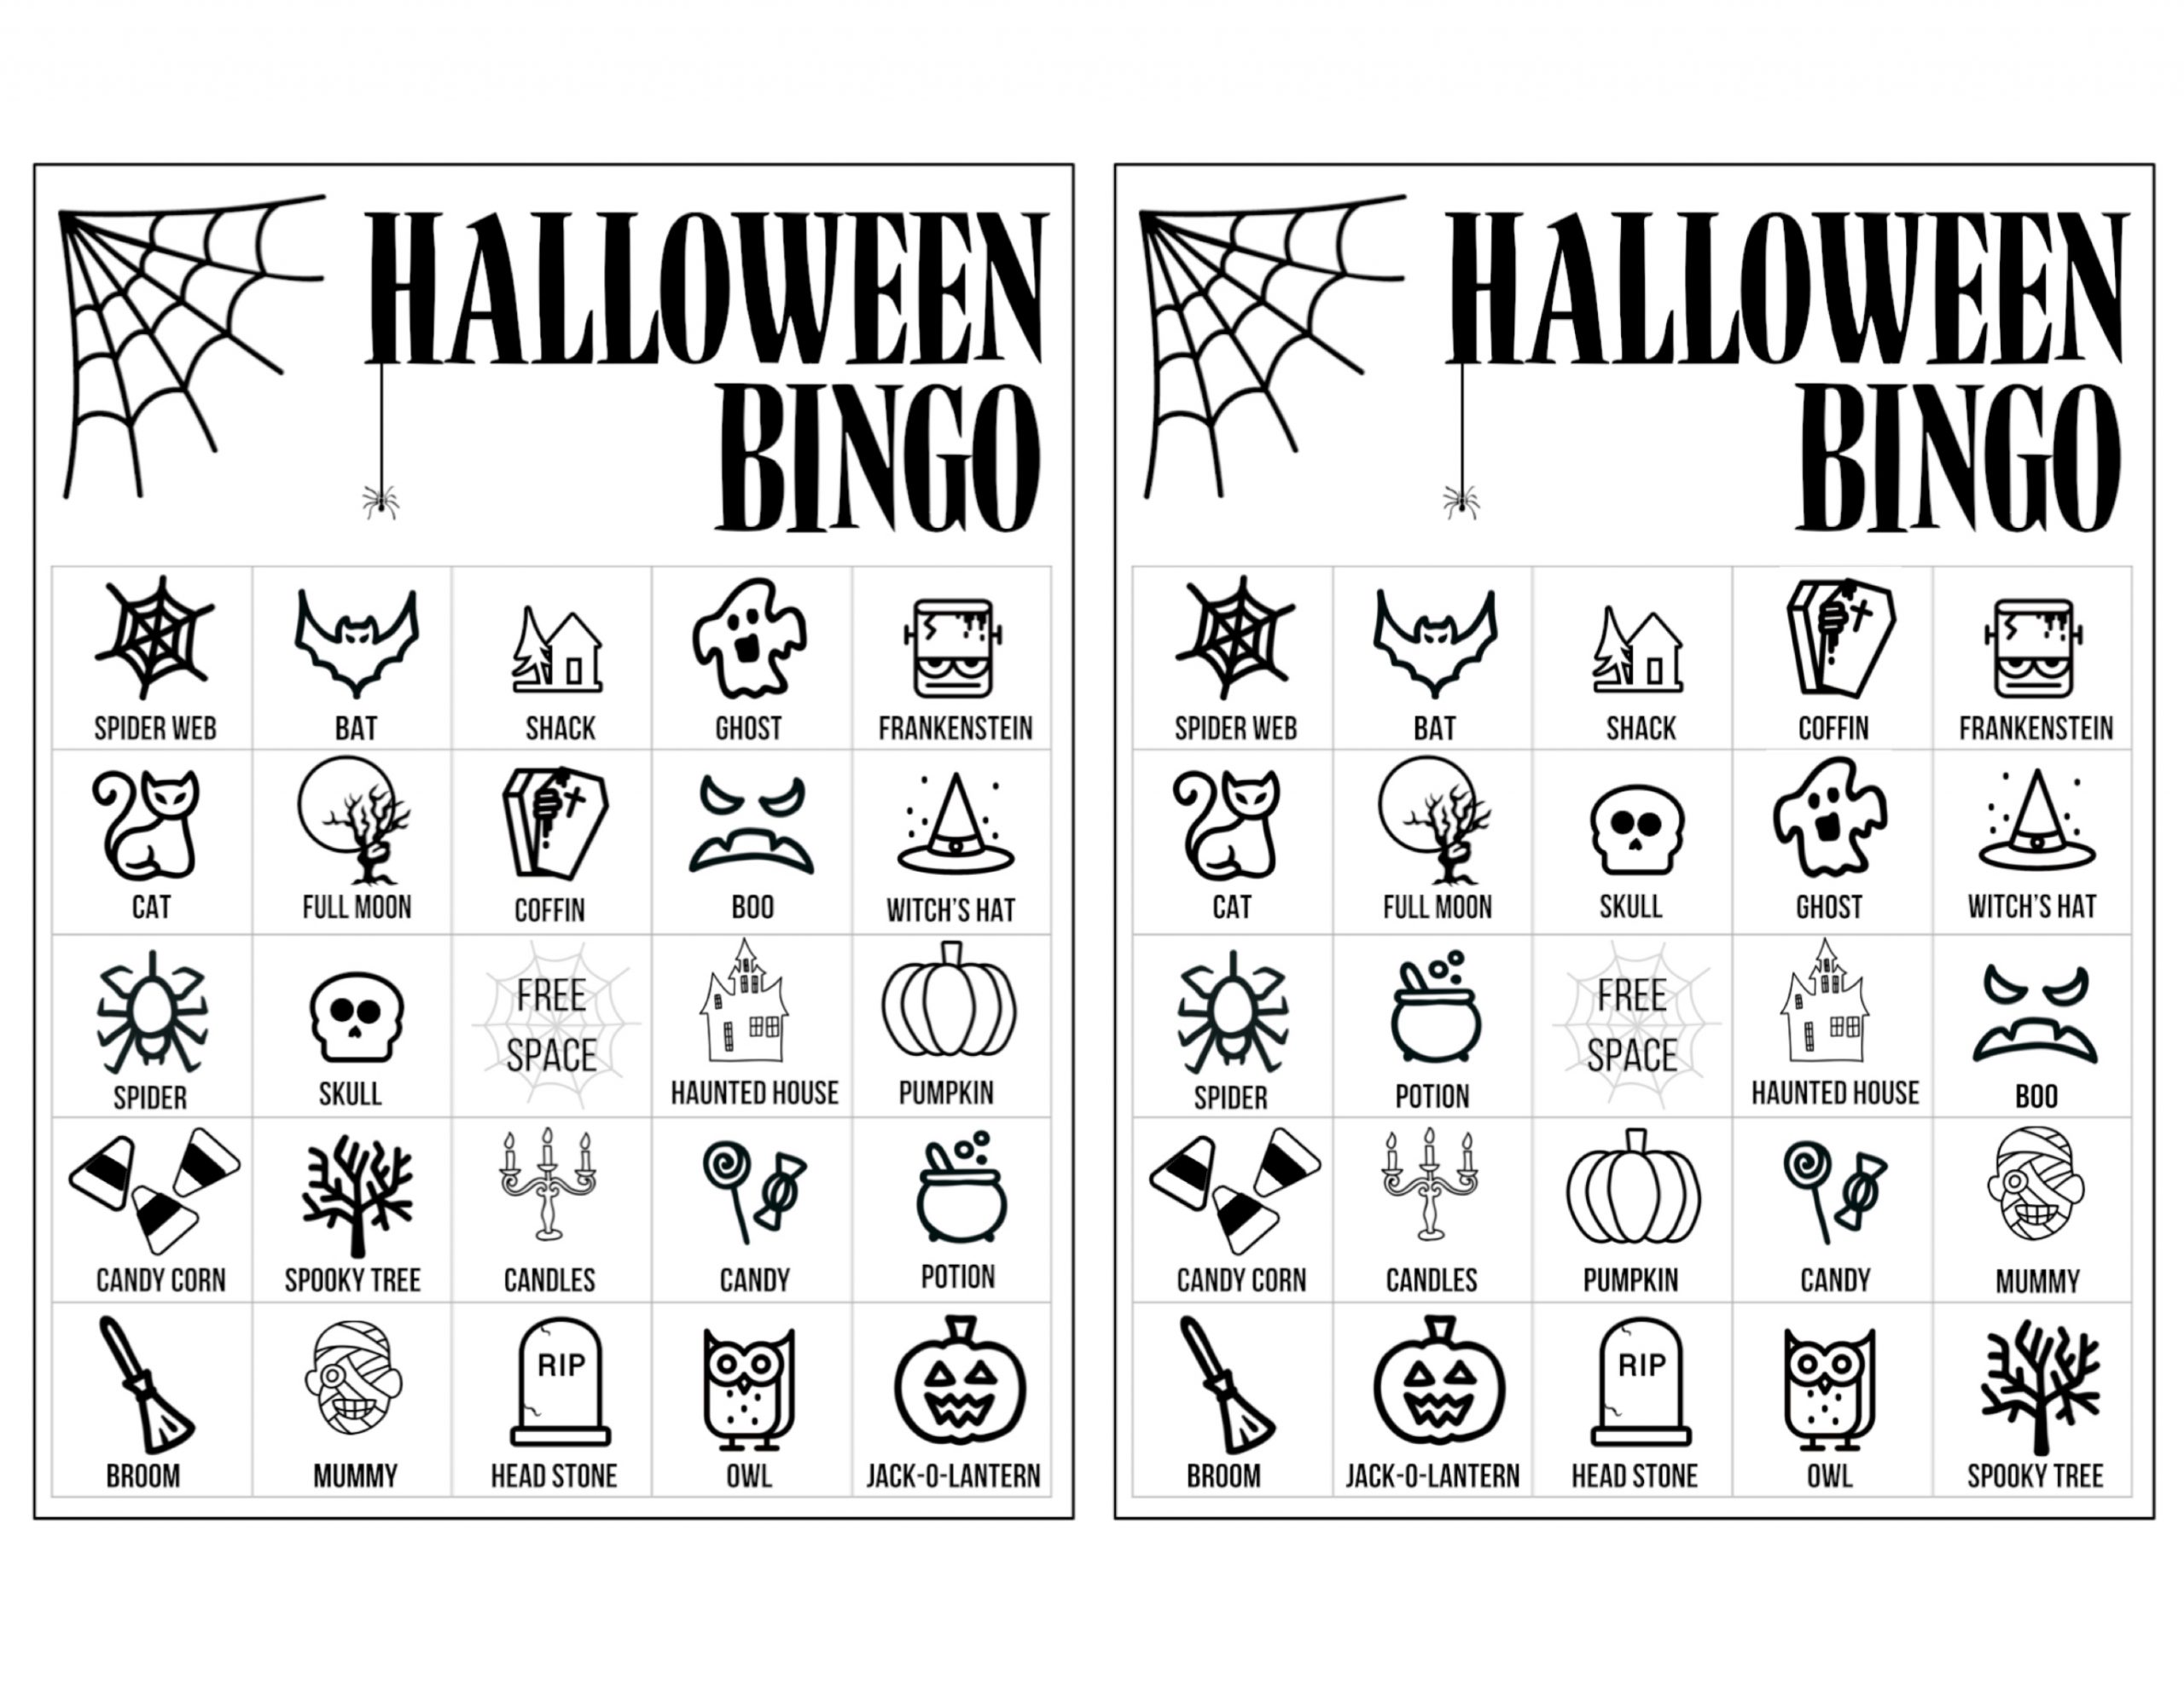 Halloween Bingo Printable Game Cards Template - Paper Trail